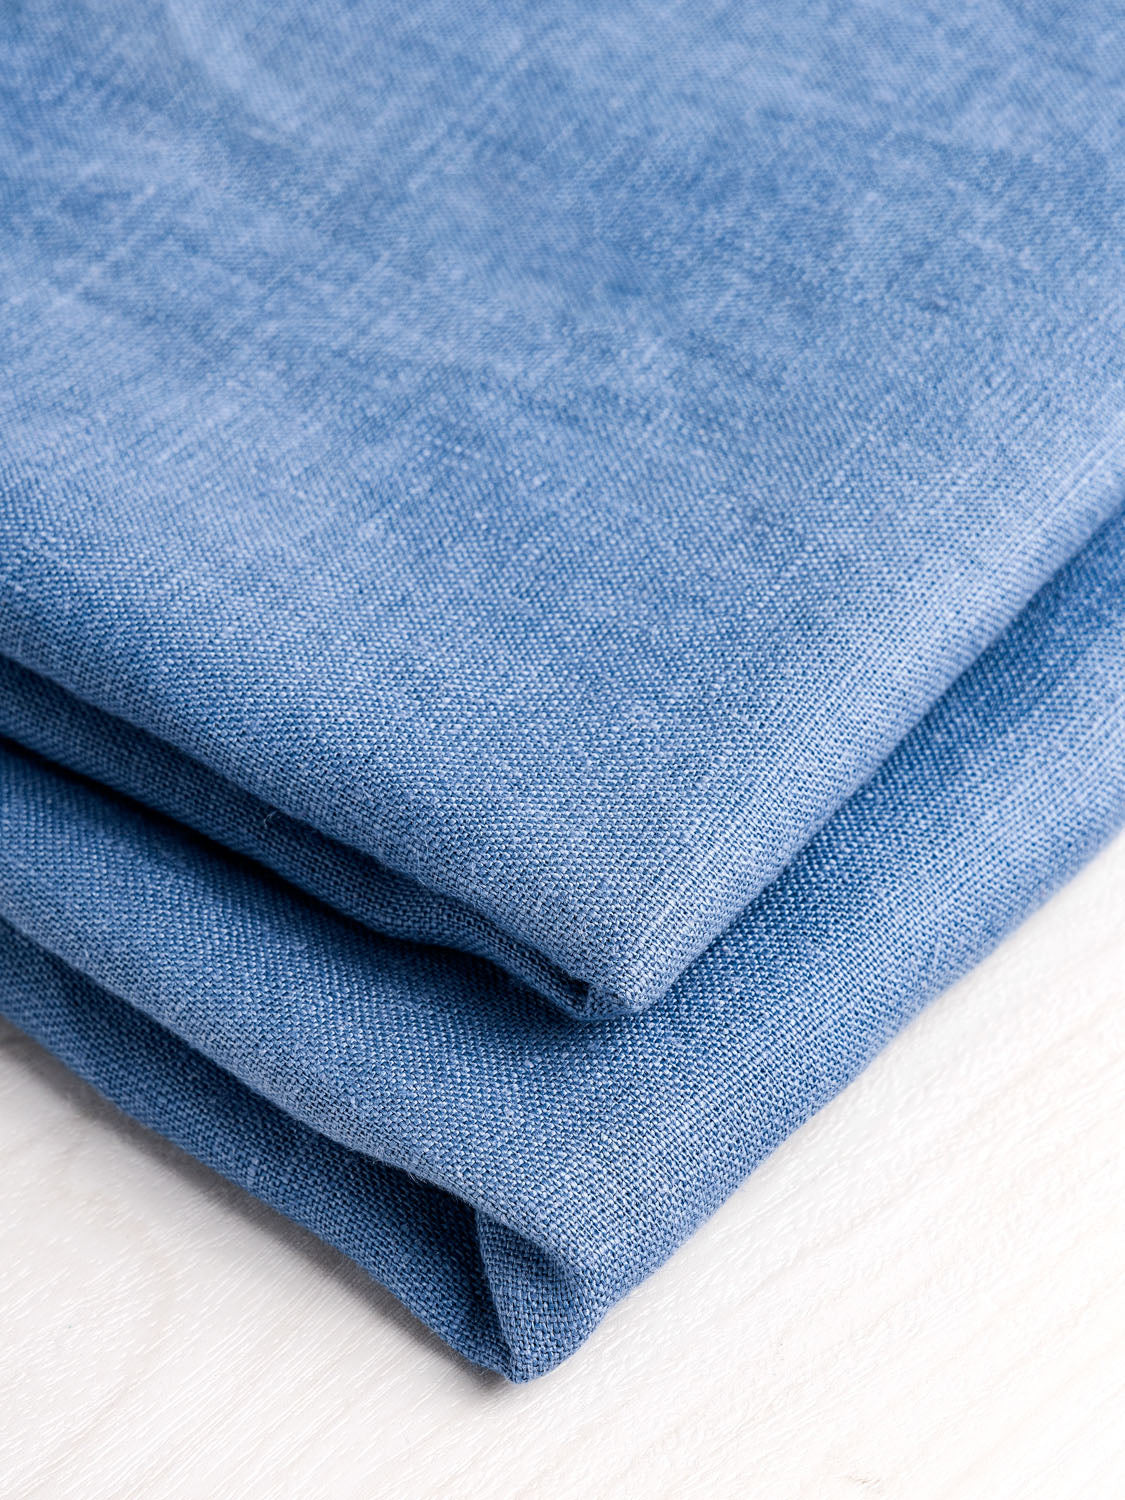 Midweight Core Collection Linen - Denim Blue | Core Fabrics